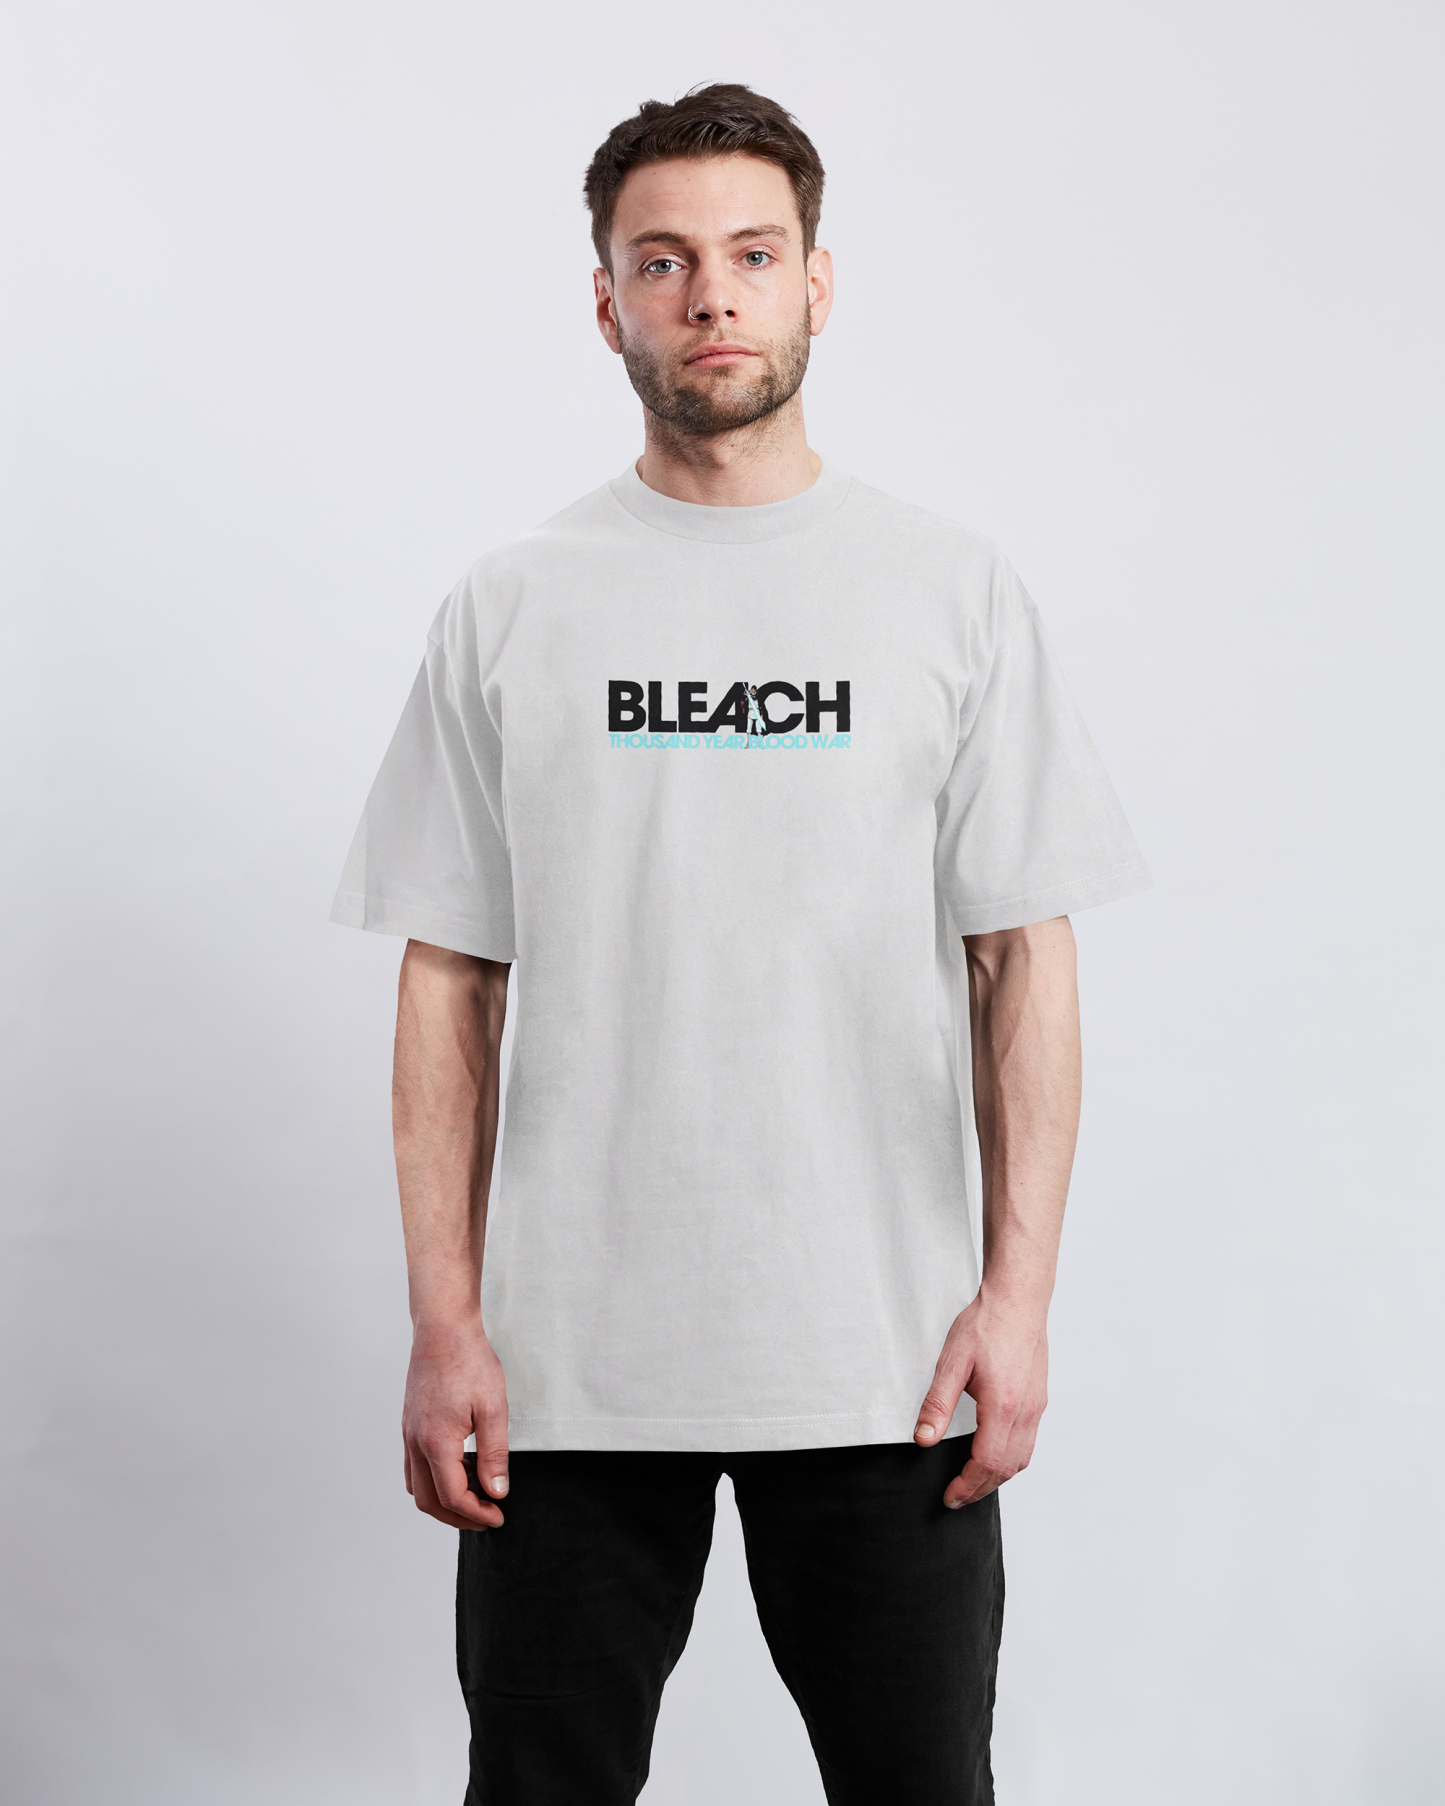 Yhwach Bleach | White T-Shirt TYBW